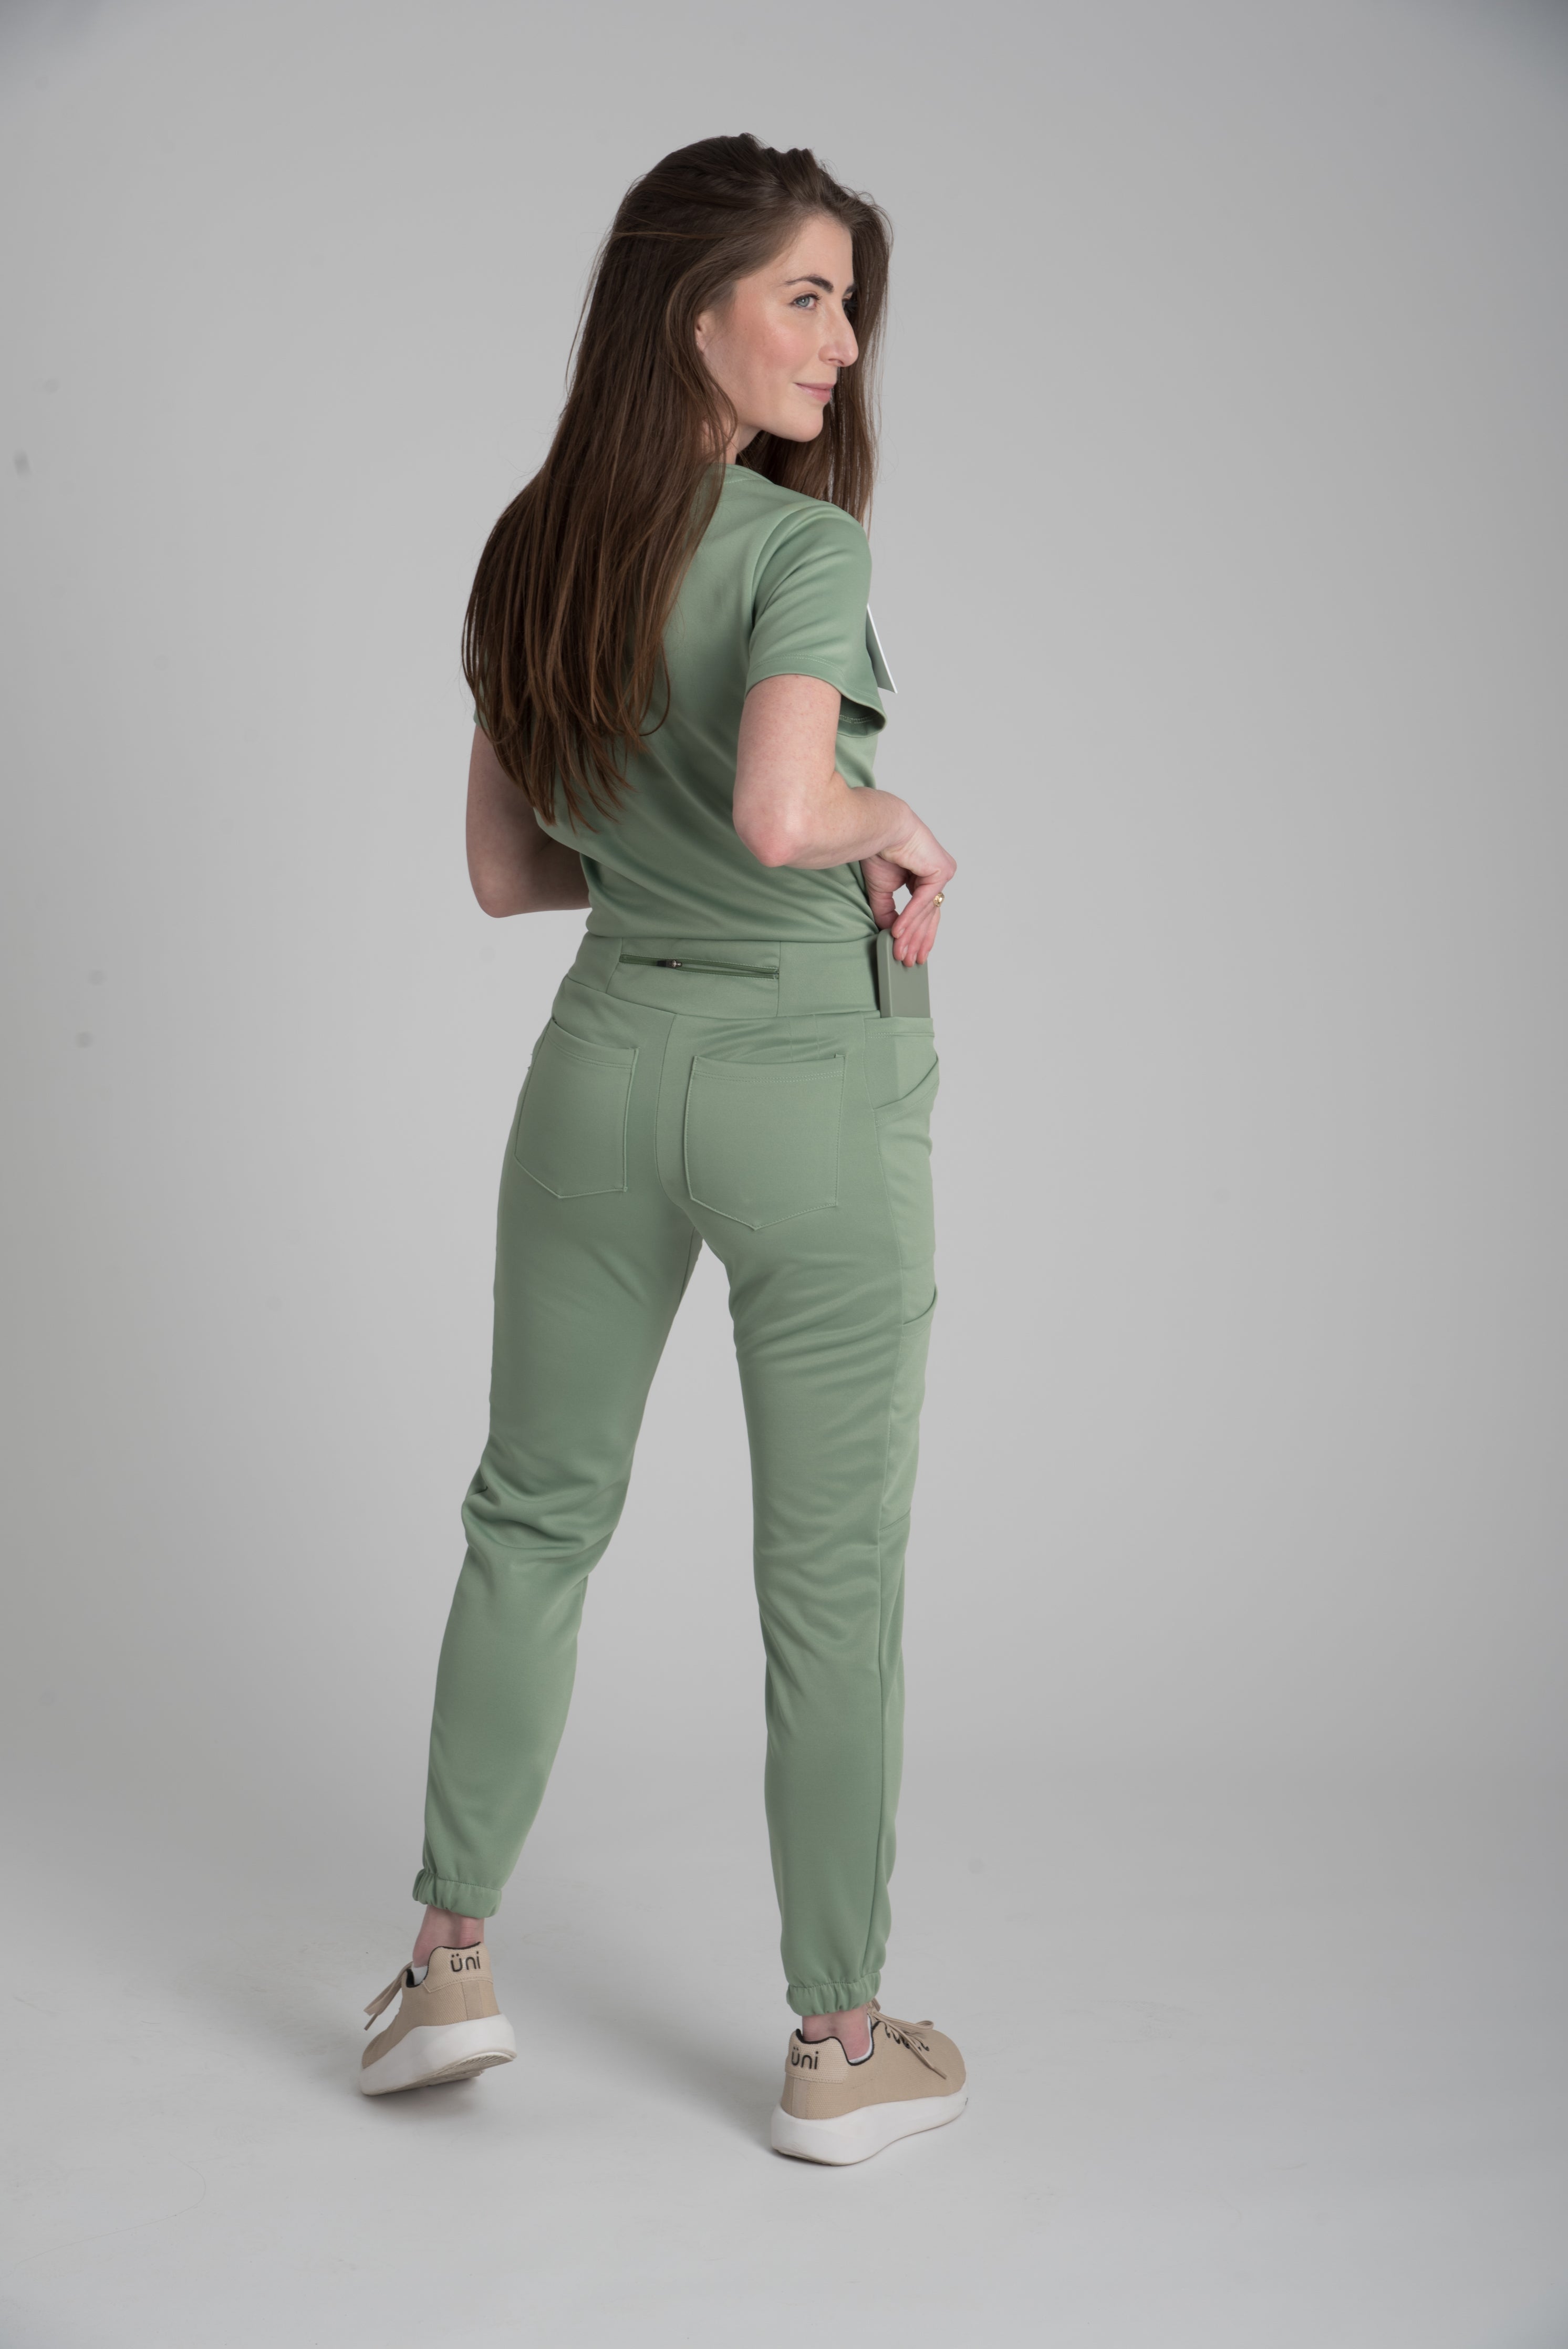 JWZUY Womens Solid Casual Sweatpant Joggers Pants Ankle-Length Ruffle Trim  Elastic Waist Pant Army Green S - Walmart.com